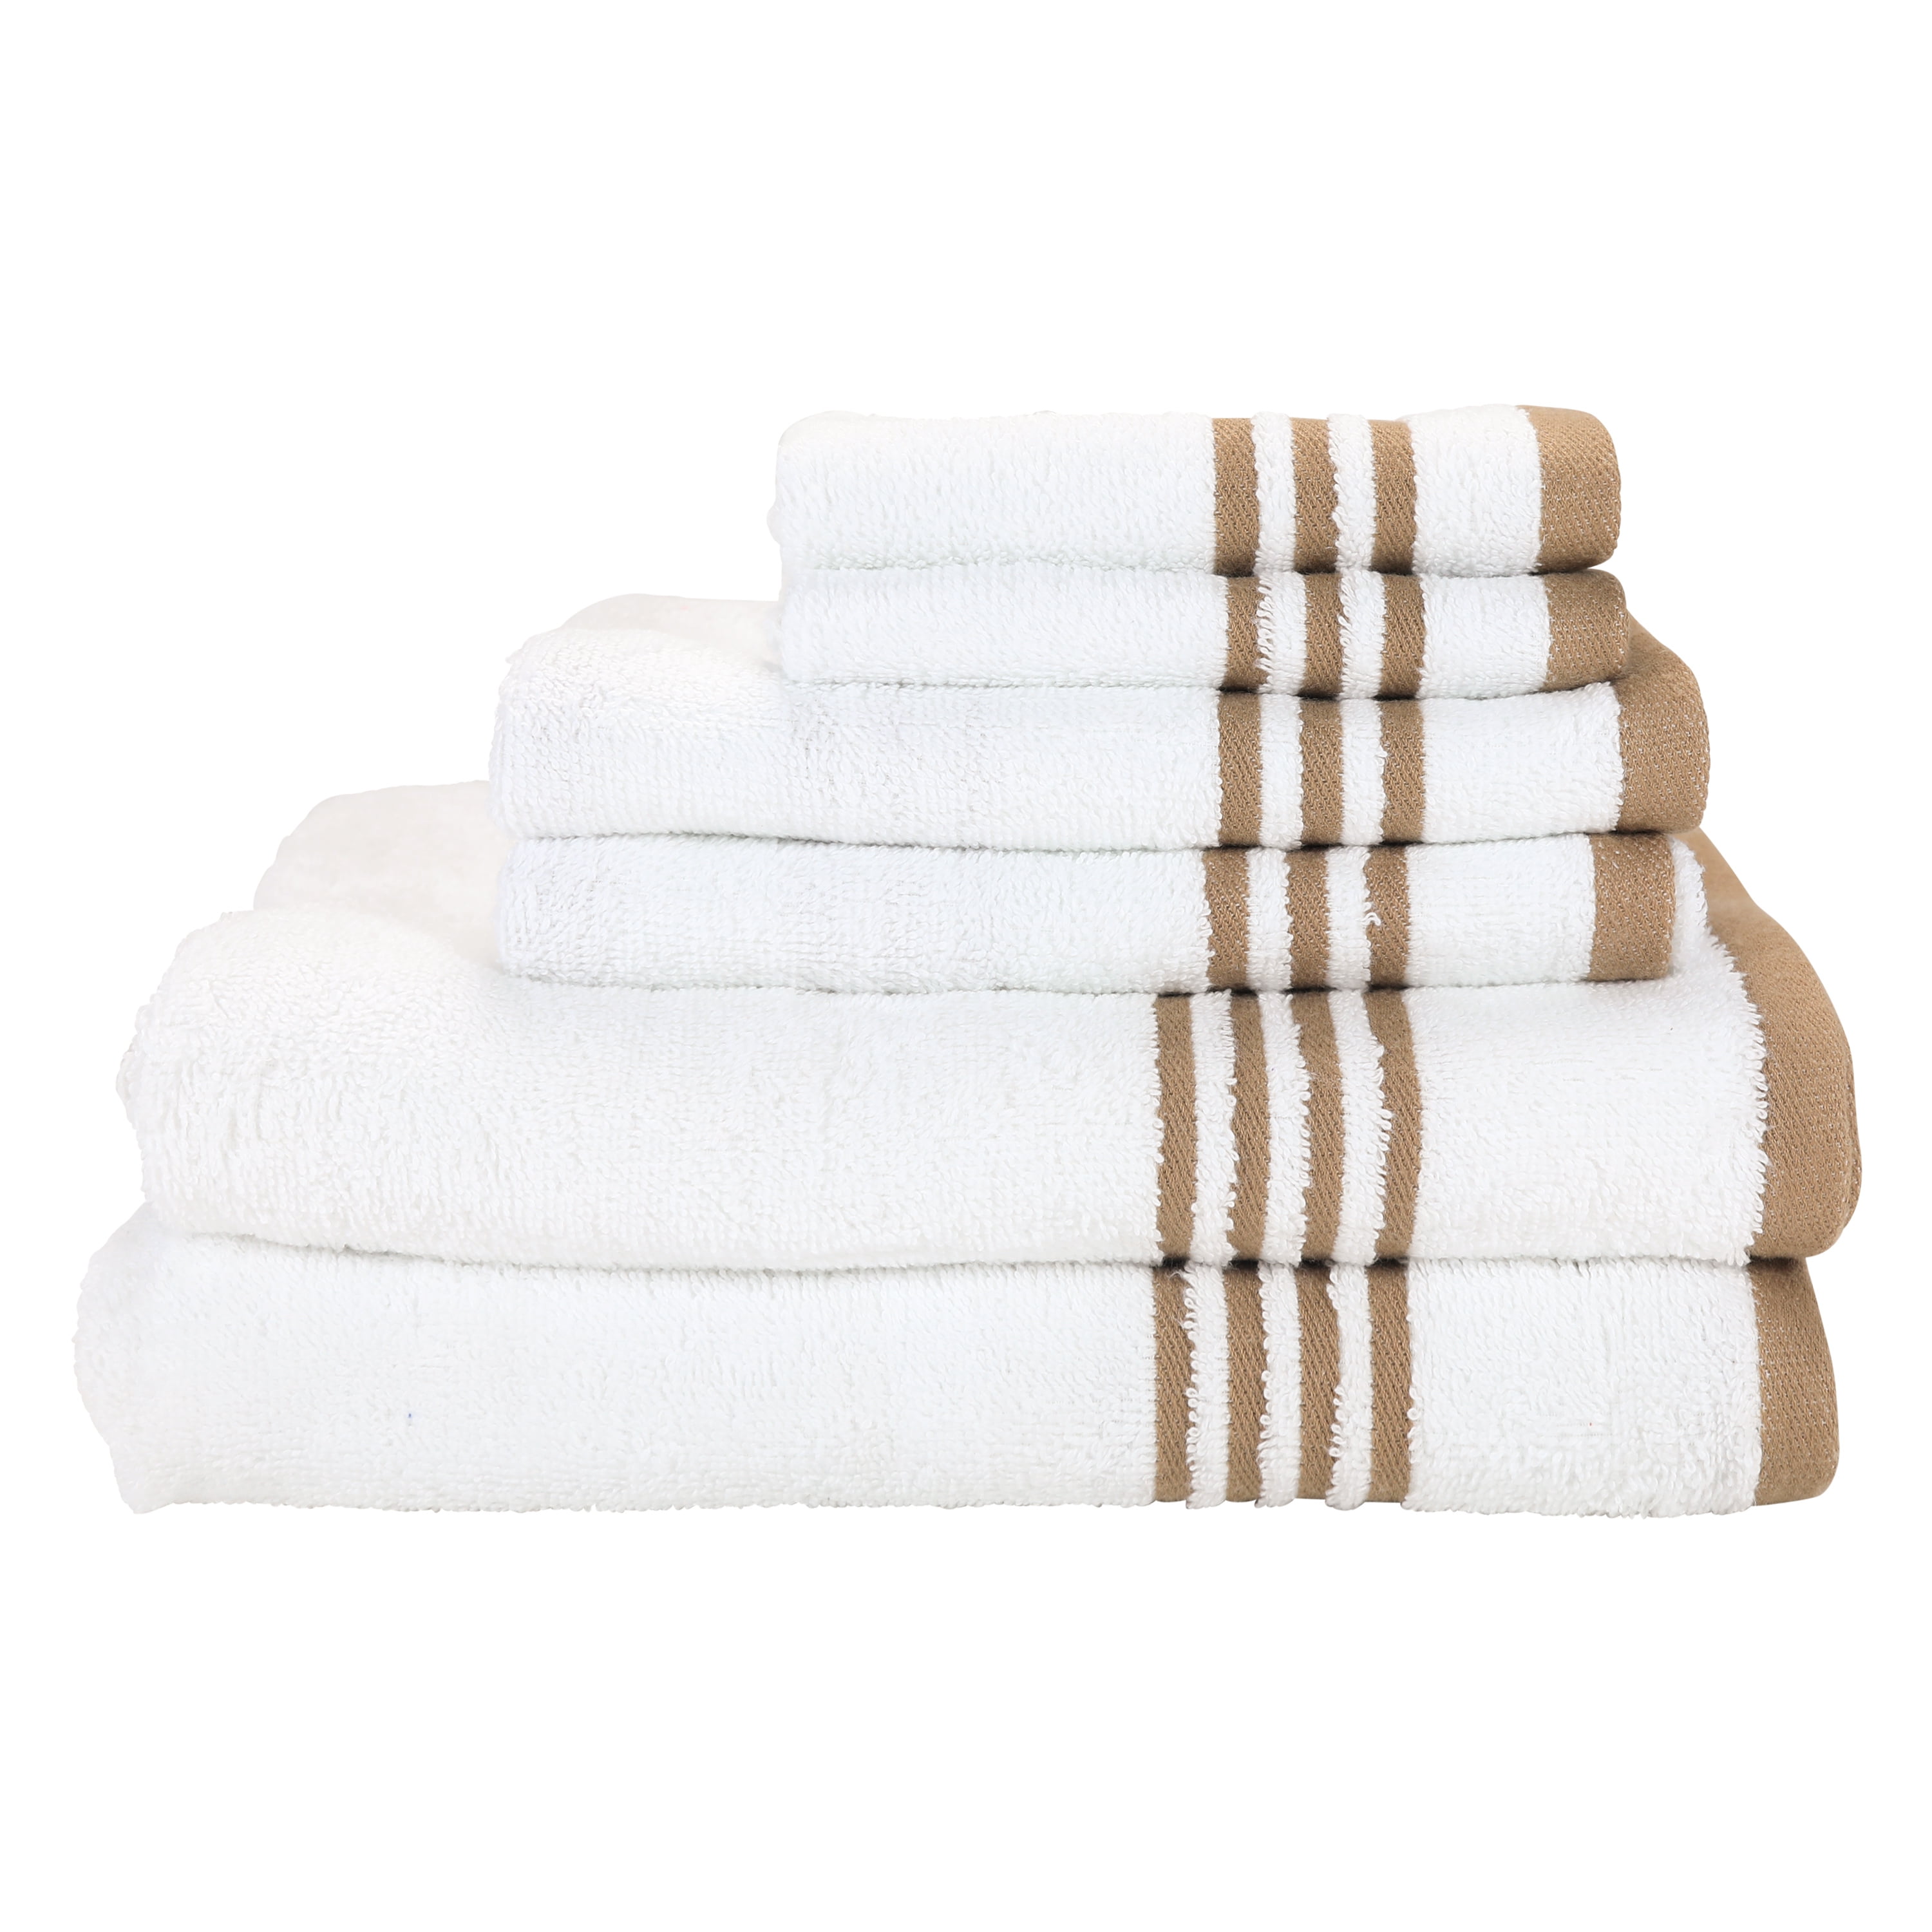 100% Pure Cotton Towels Bathroom 8 pcs Gift Set Bath Face Hand Soft Absorbent 